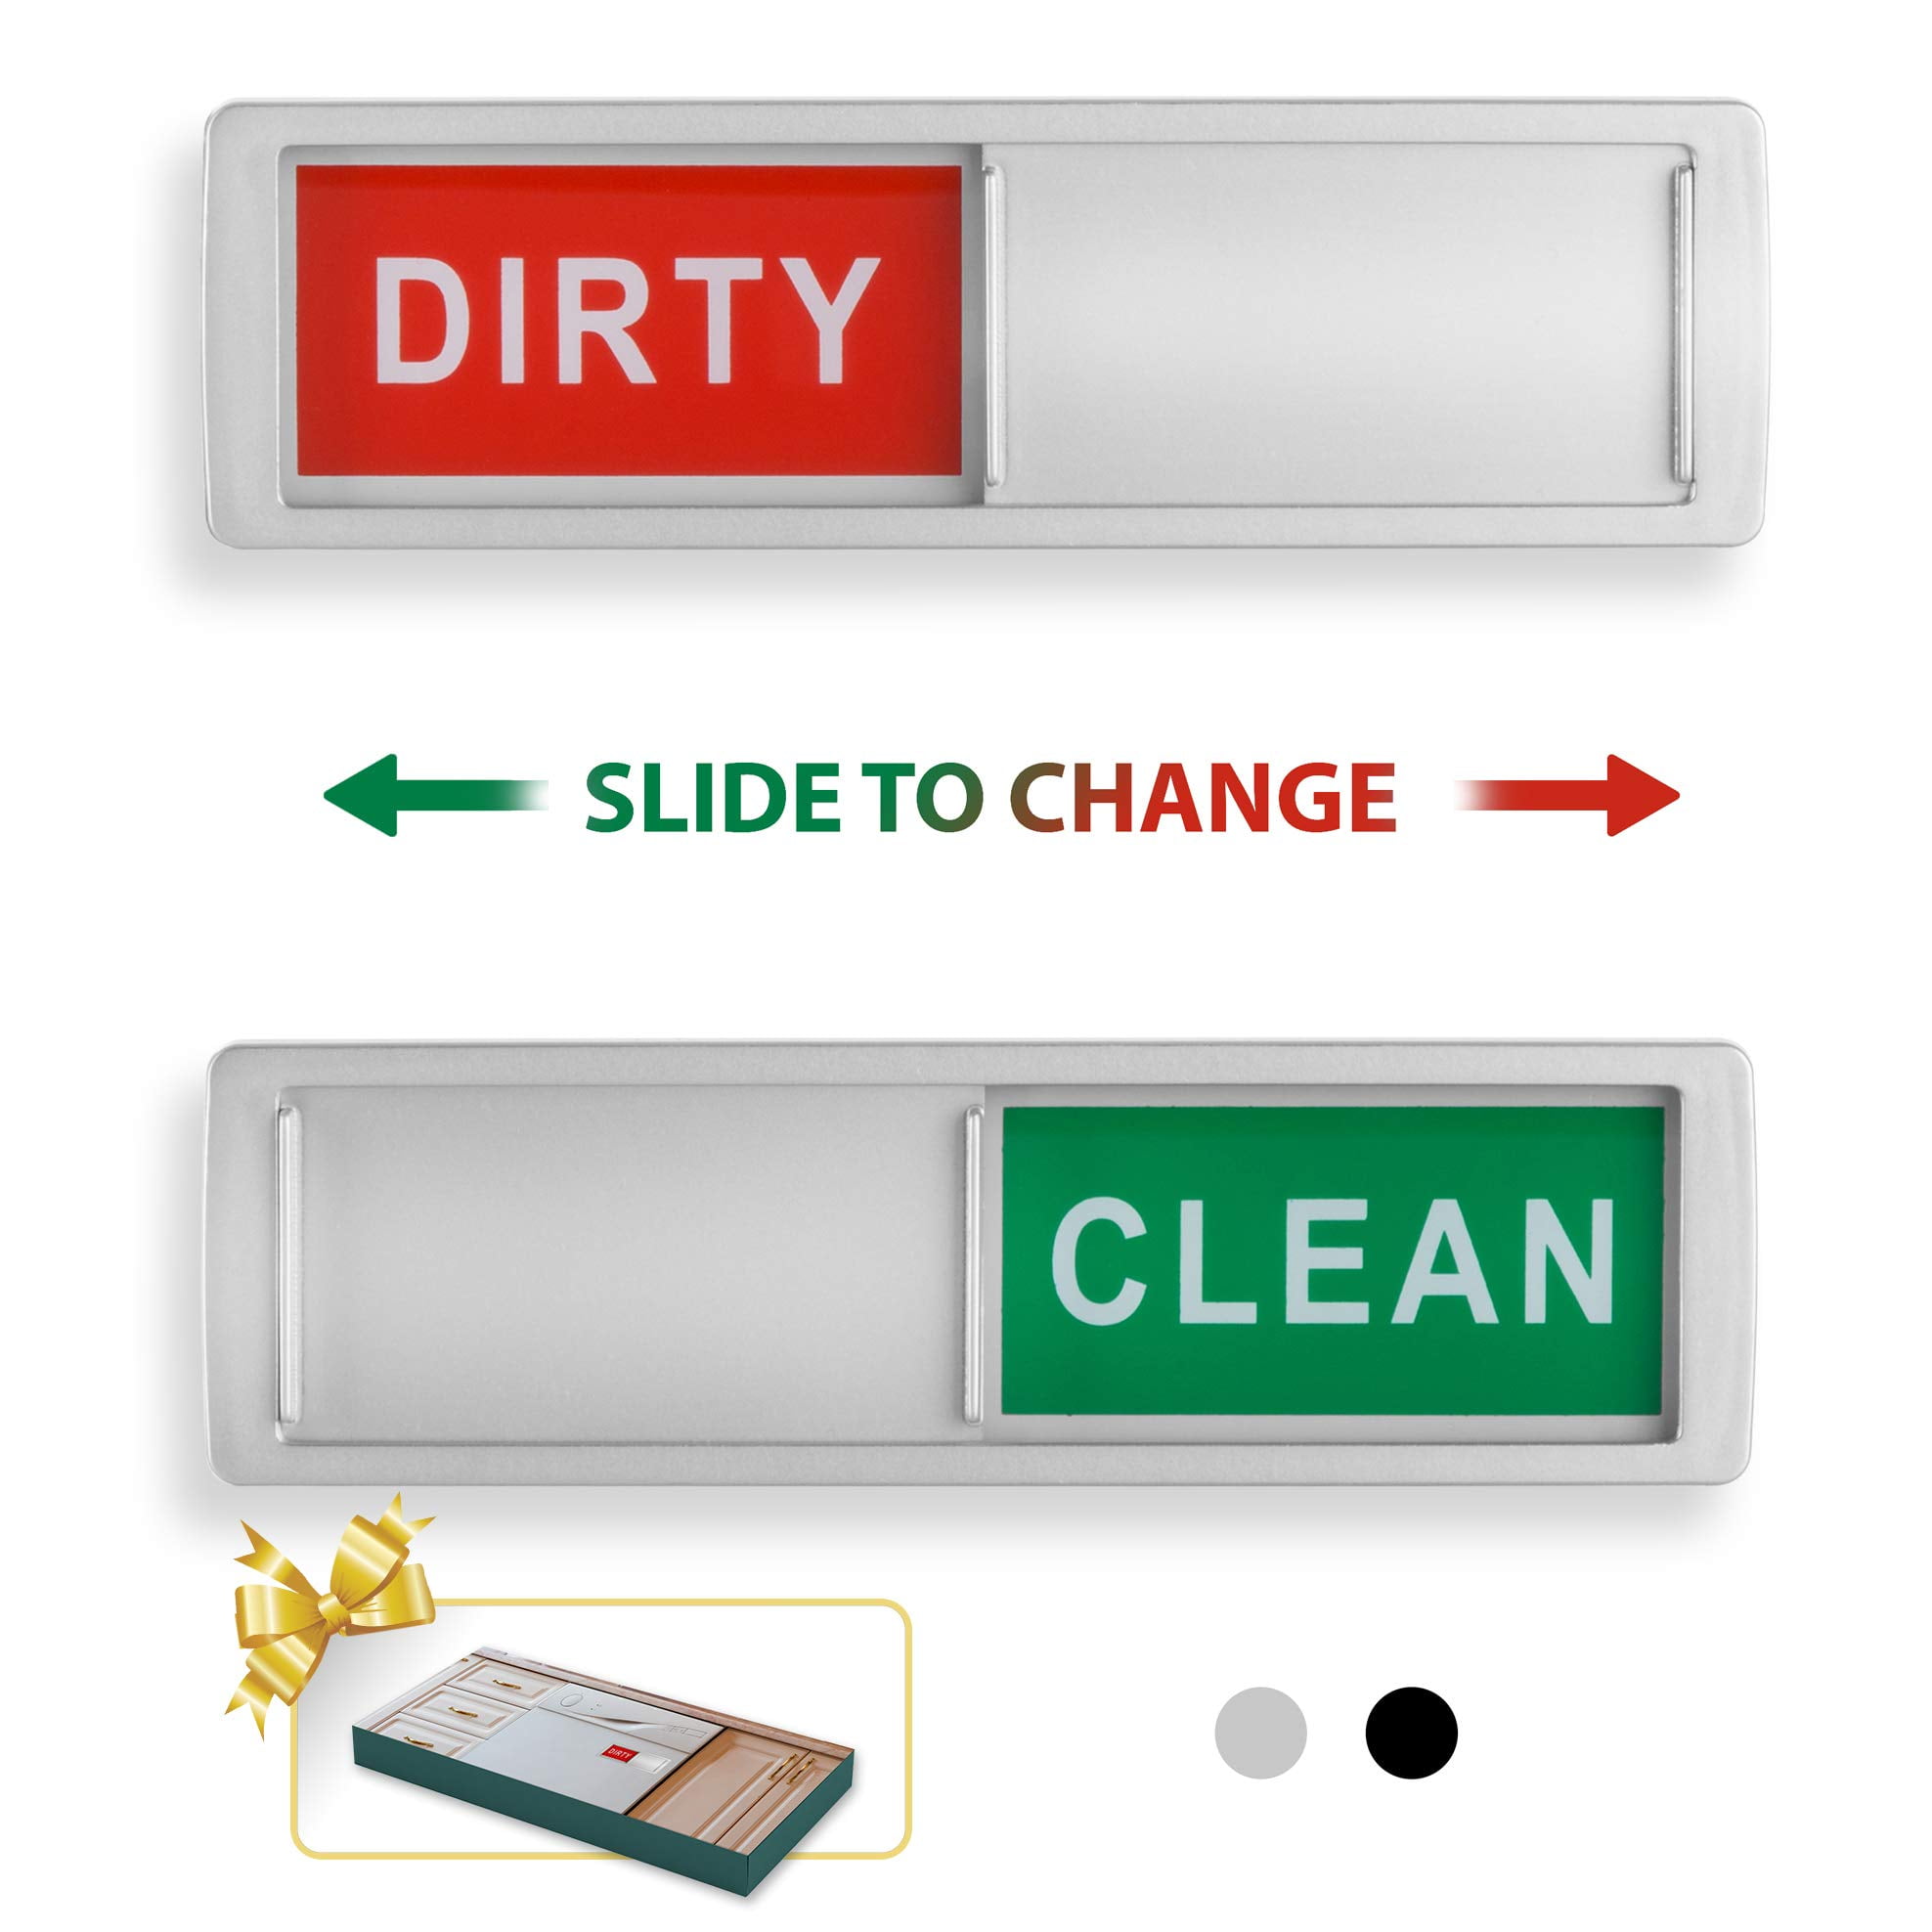 Details about   Dishwasher Clean Dirty Sign Magnetic Stick On Sliding Indicator Pukkr 